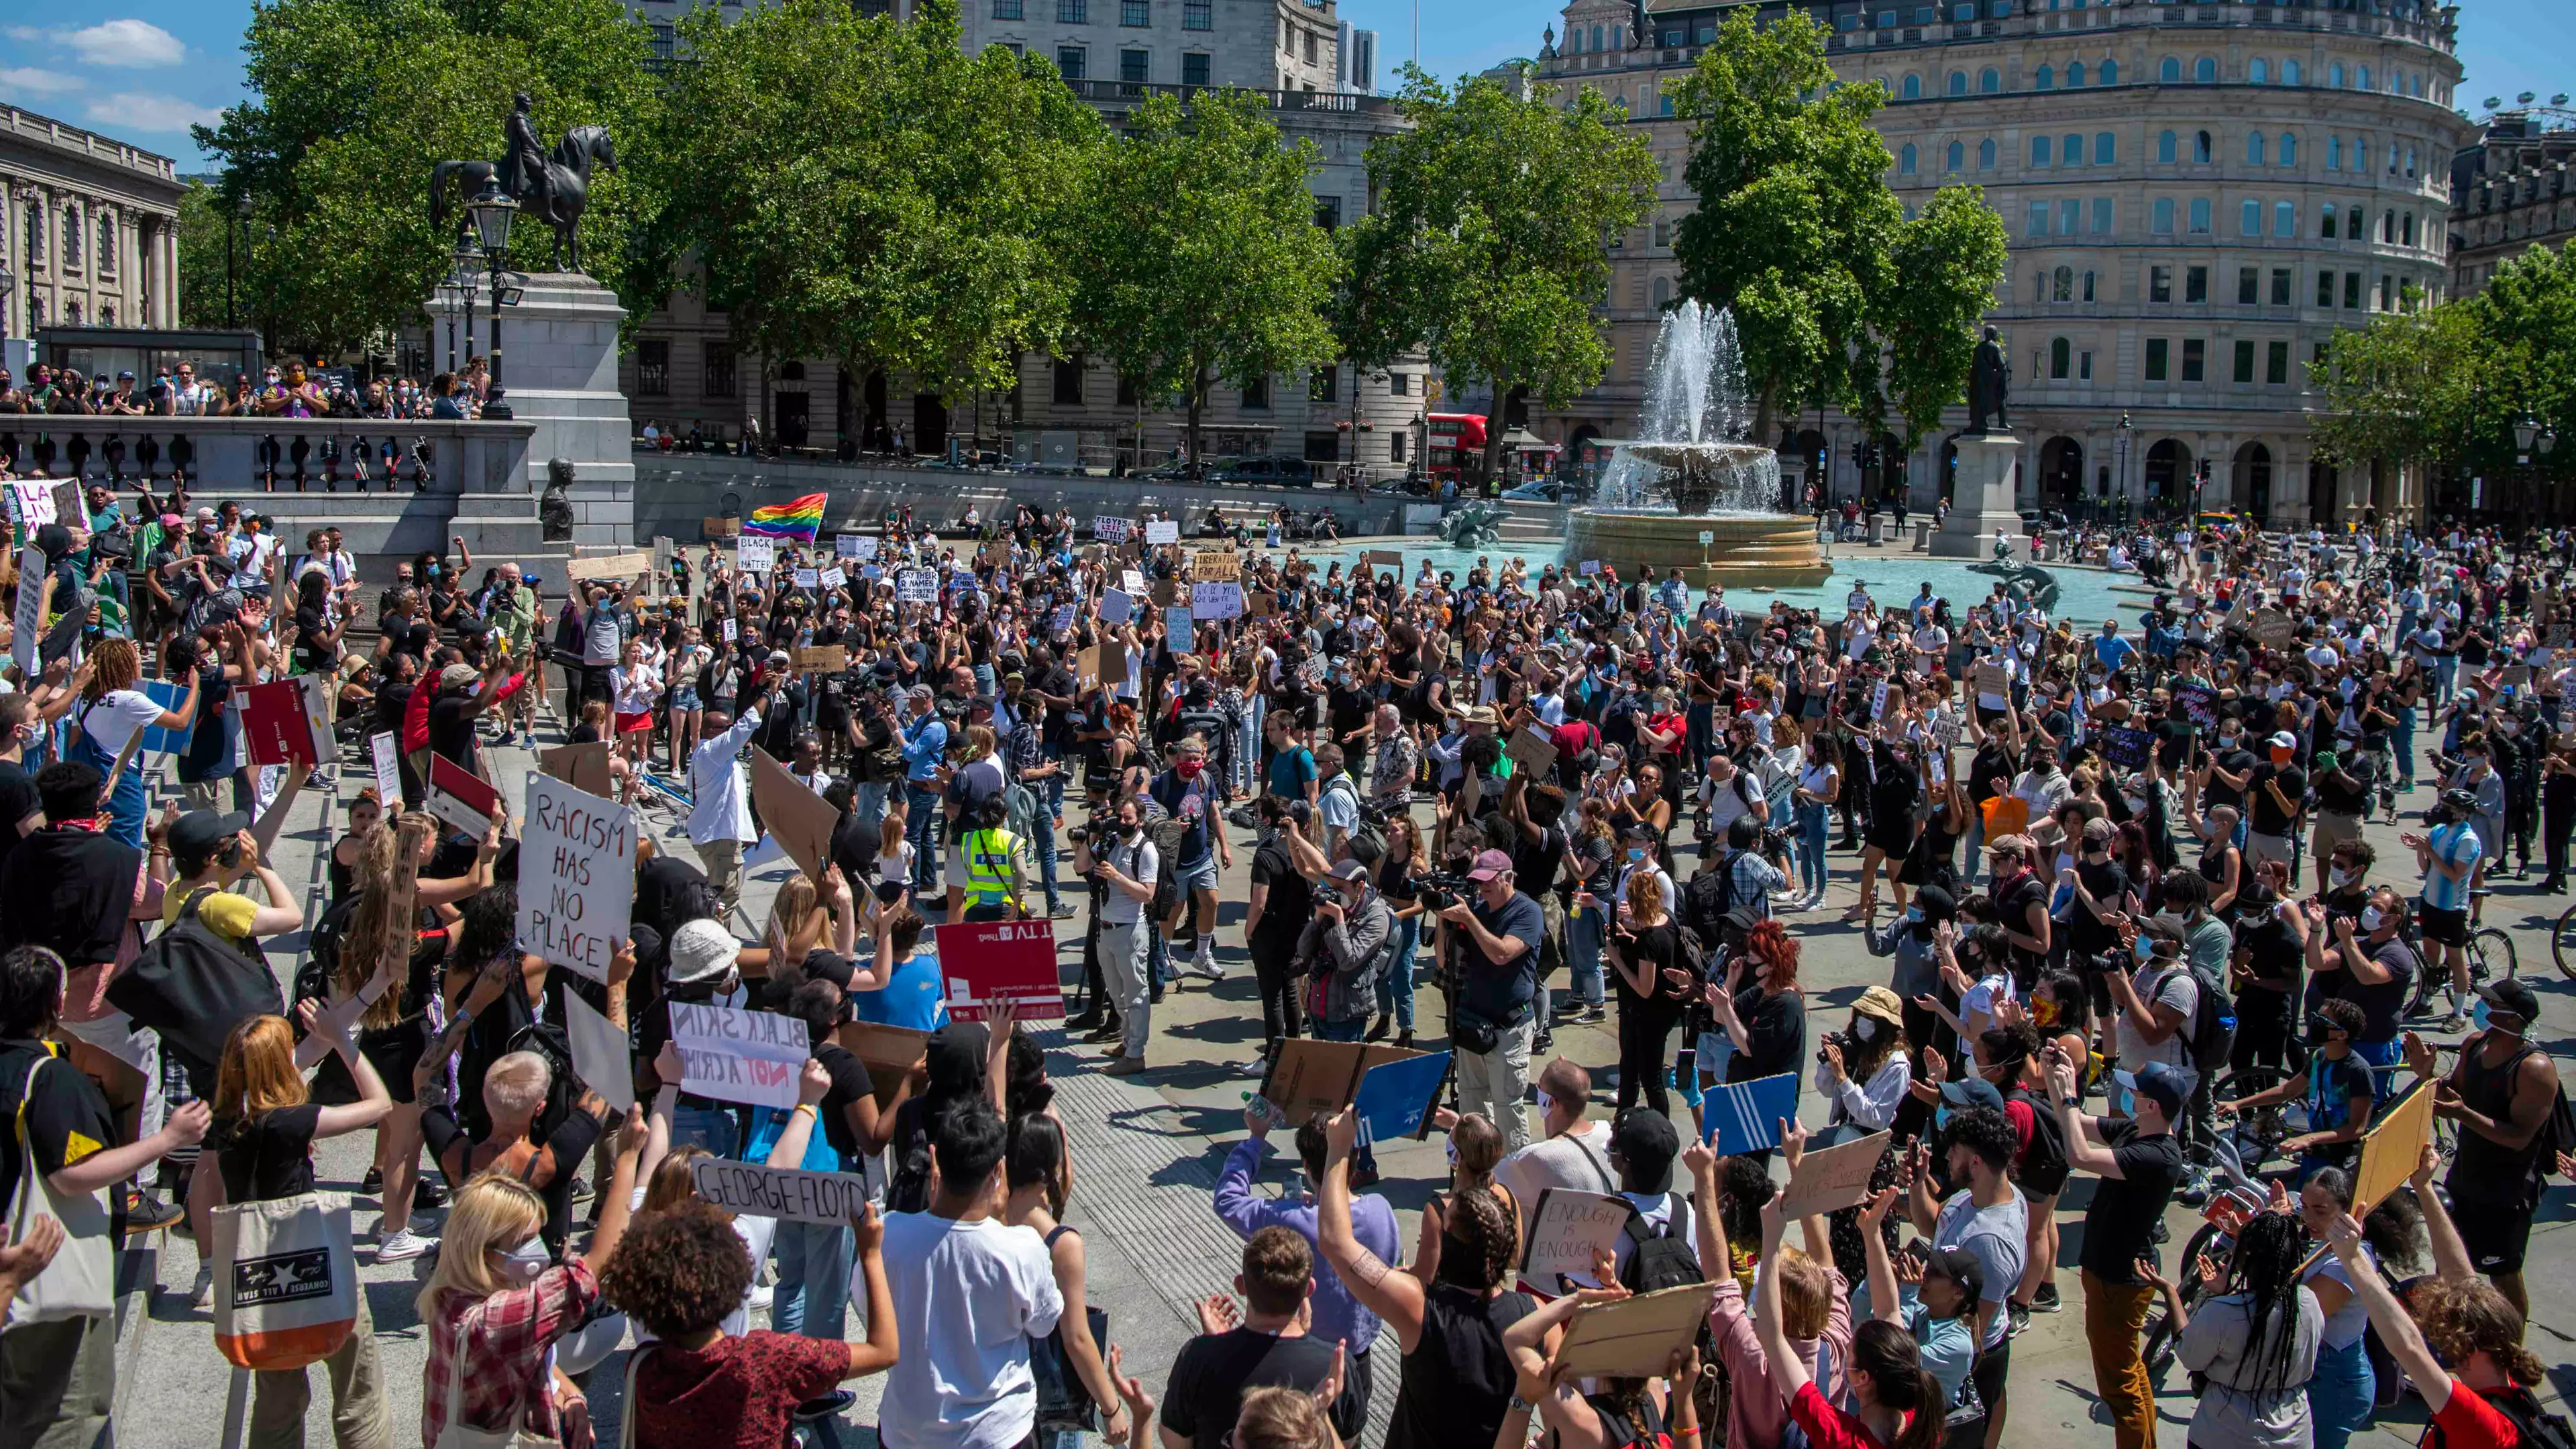 Black Lives Matter Activists Protest At Trafalgar Square Following George Floyd Death